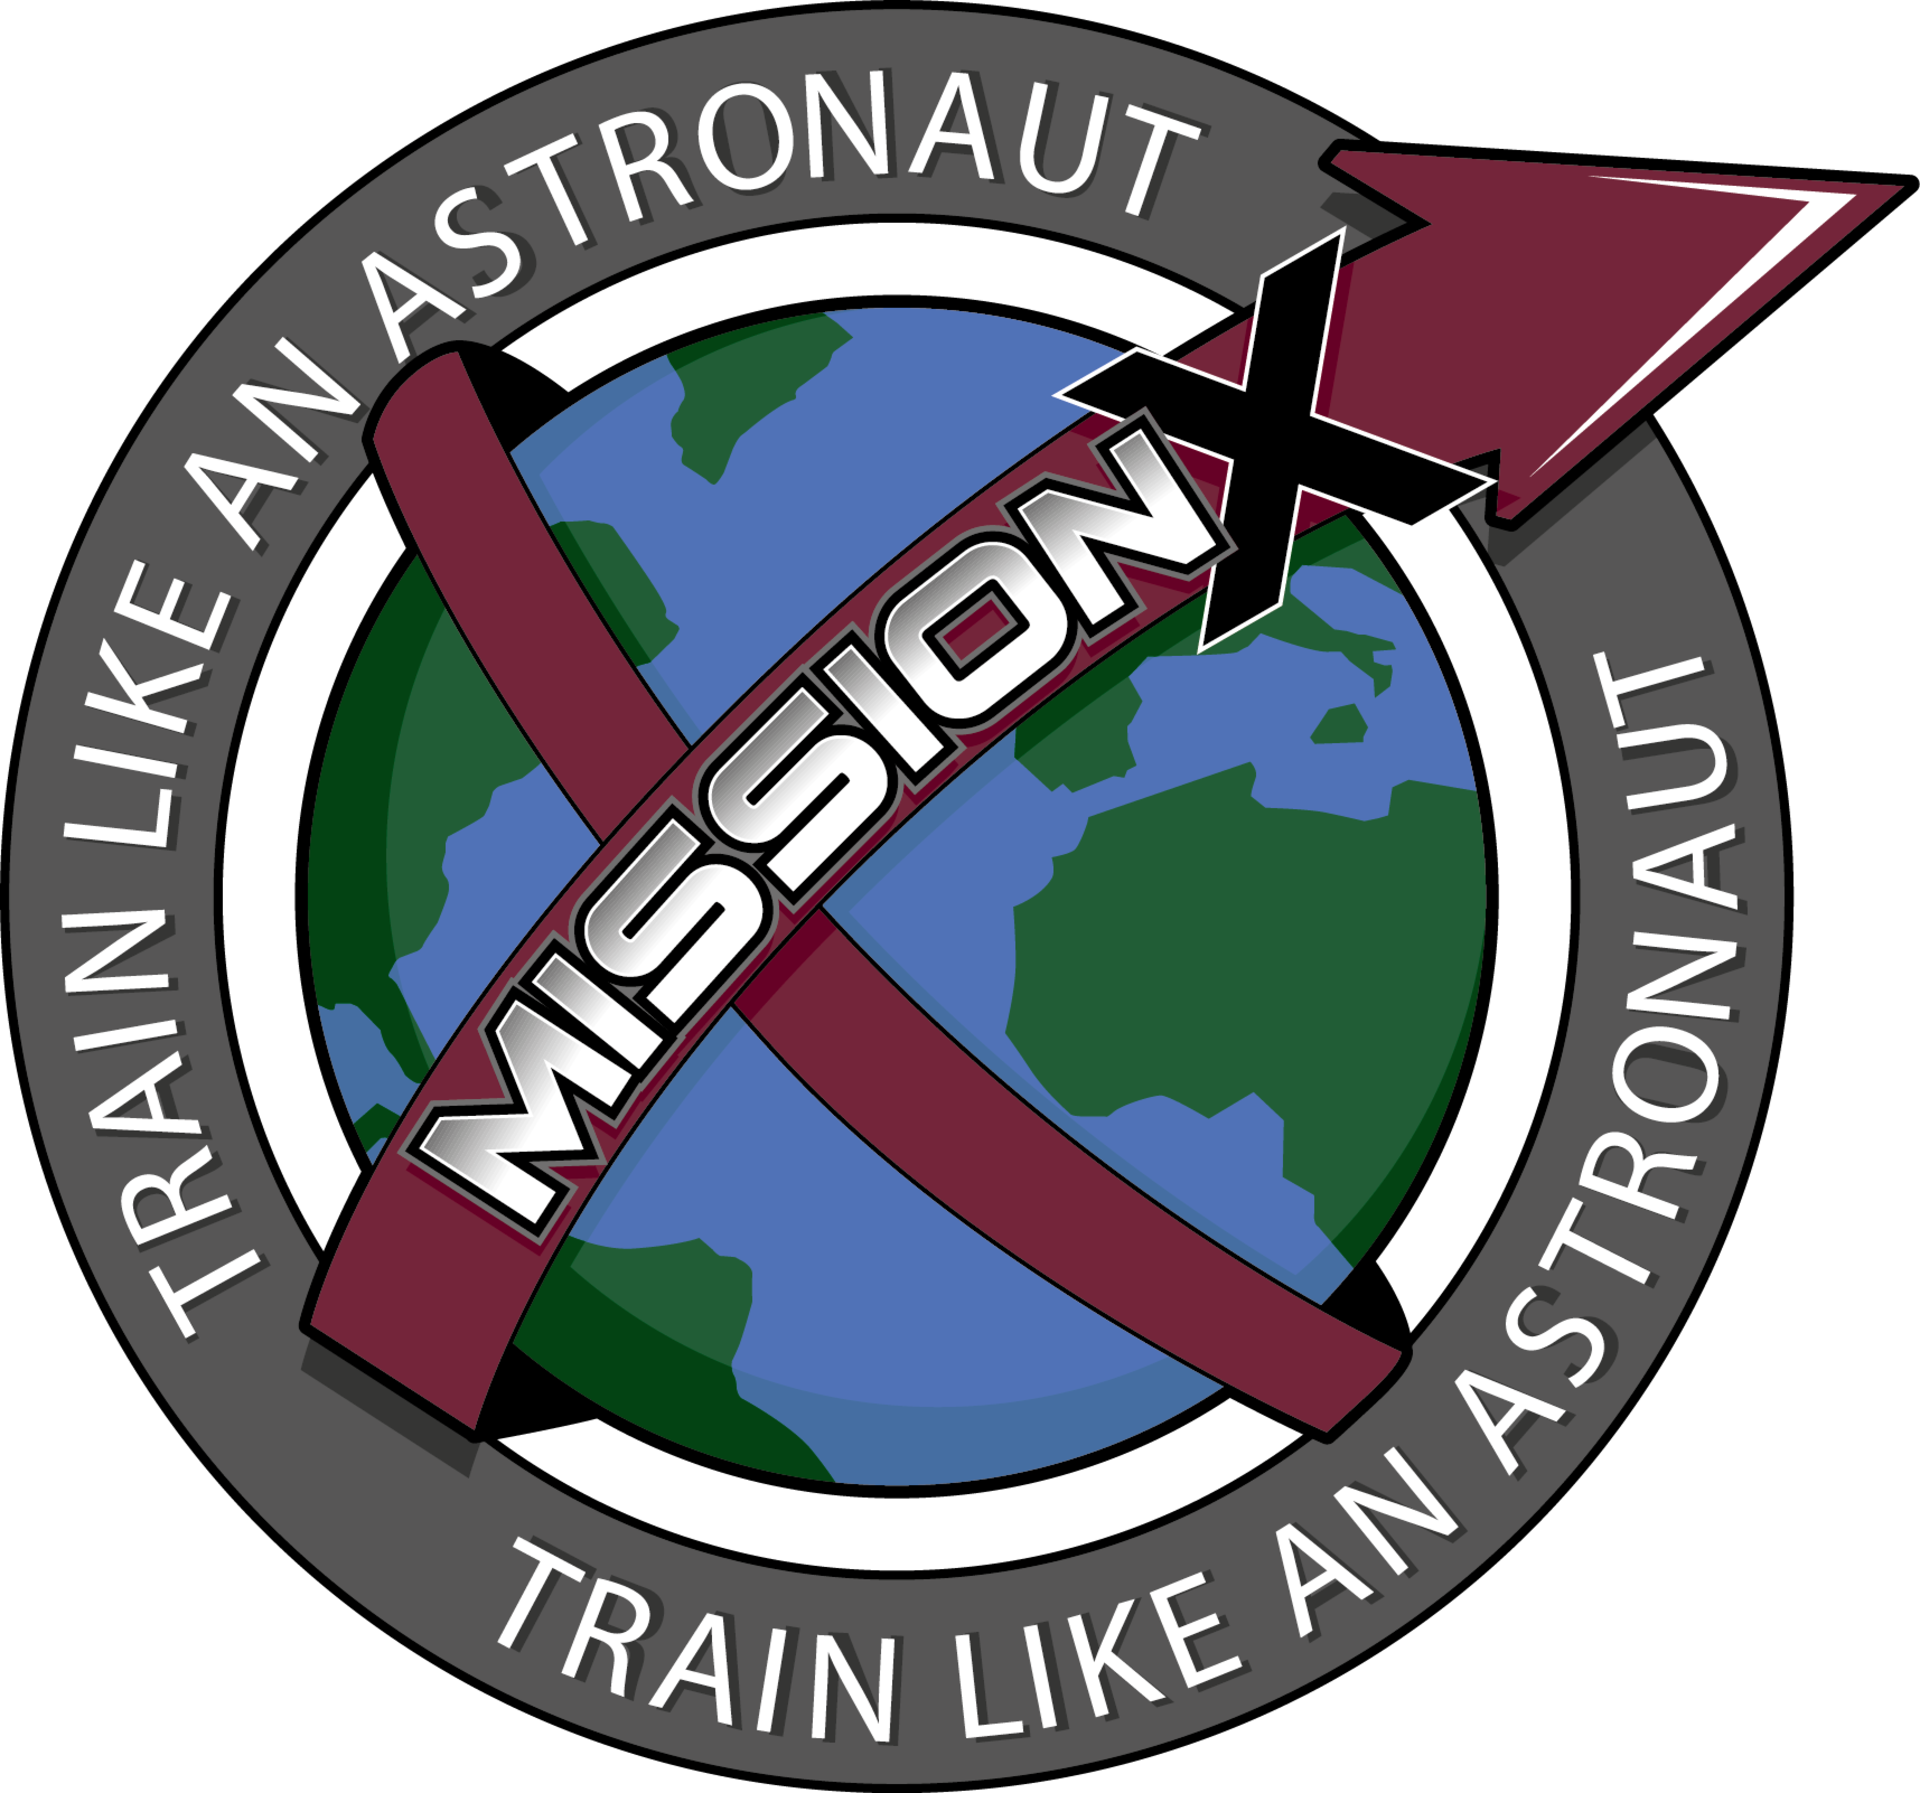 Mission-X logo